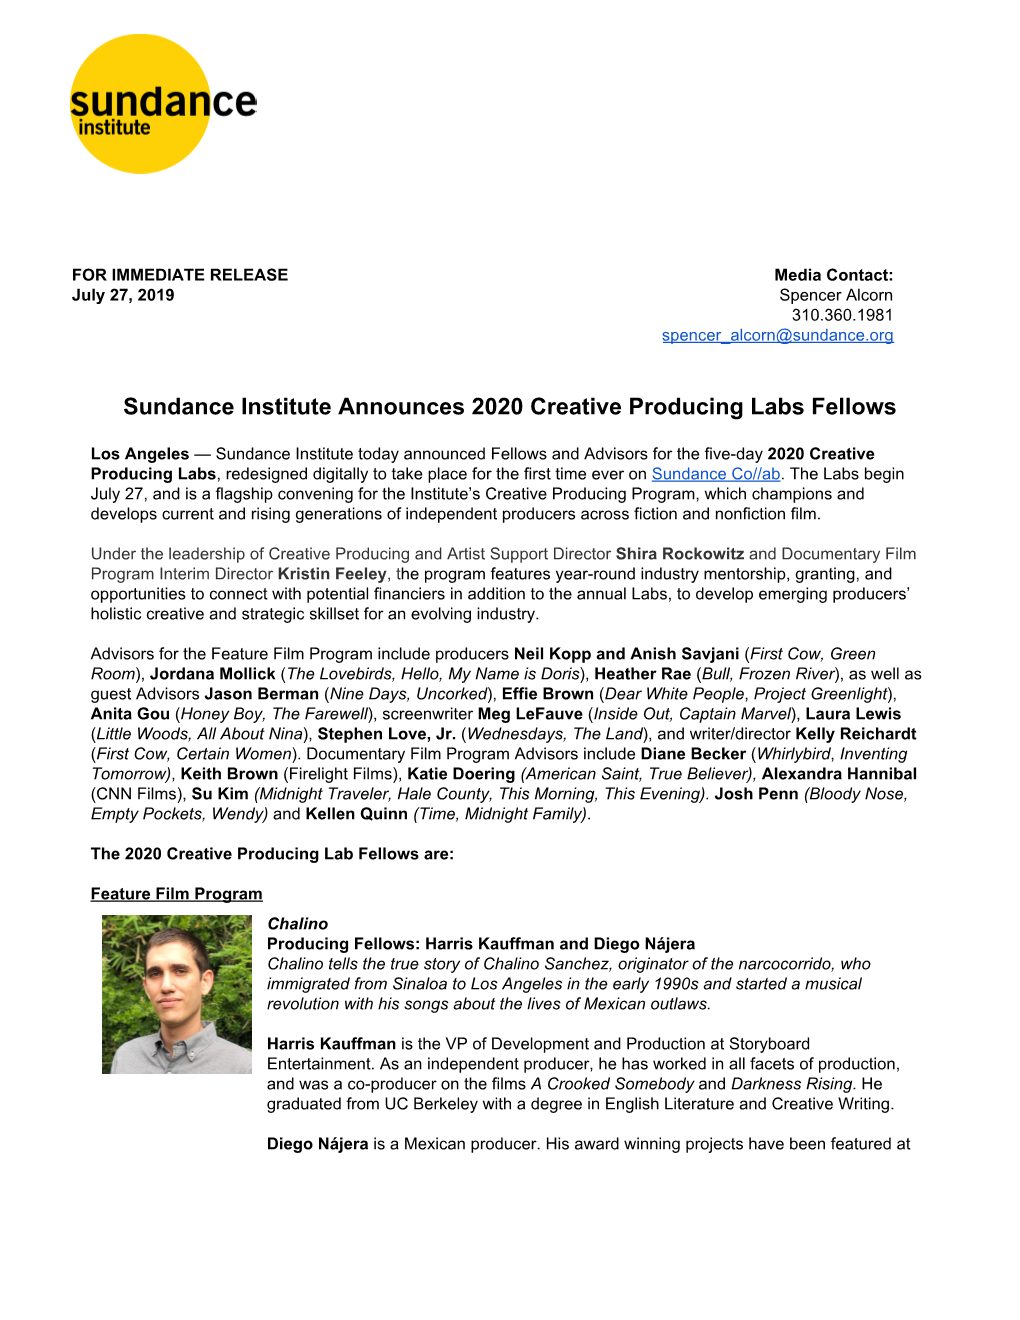 Sundance Institute Announces 2020 Creative Producing Labs Fellows